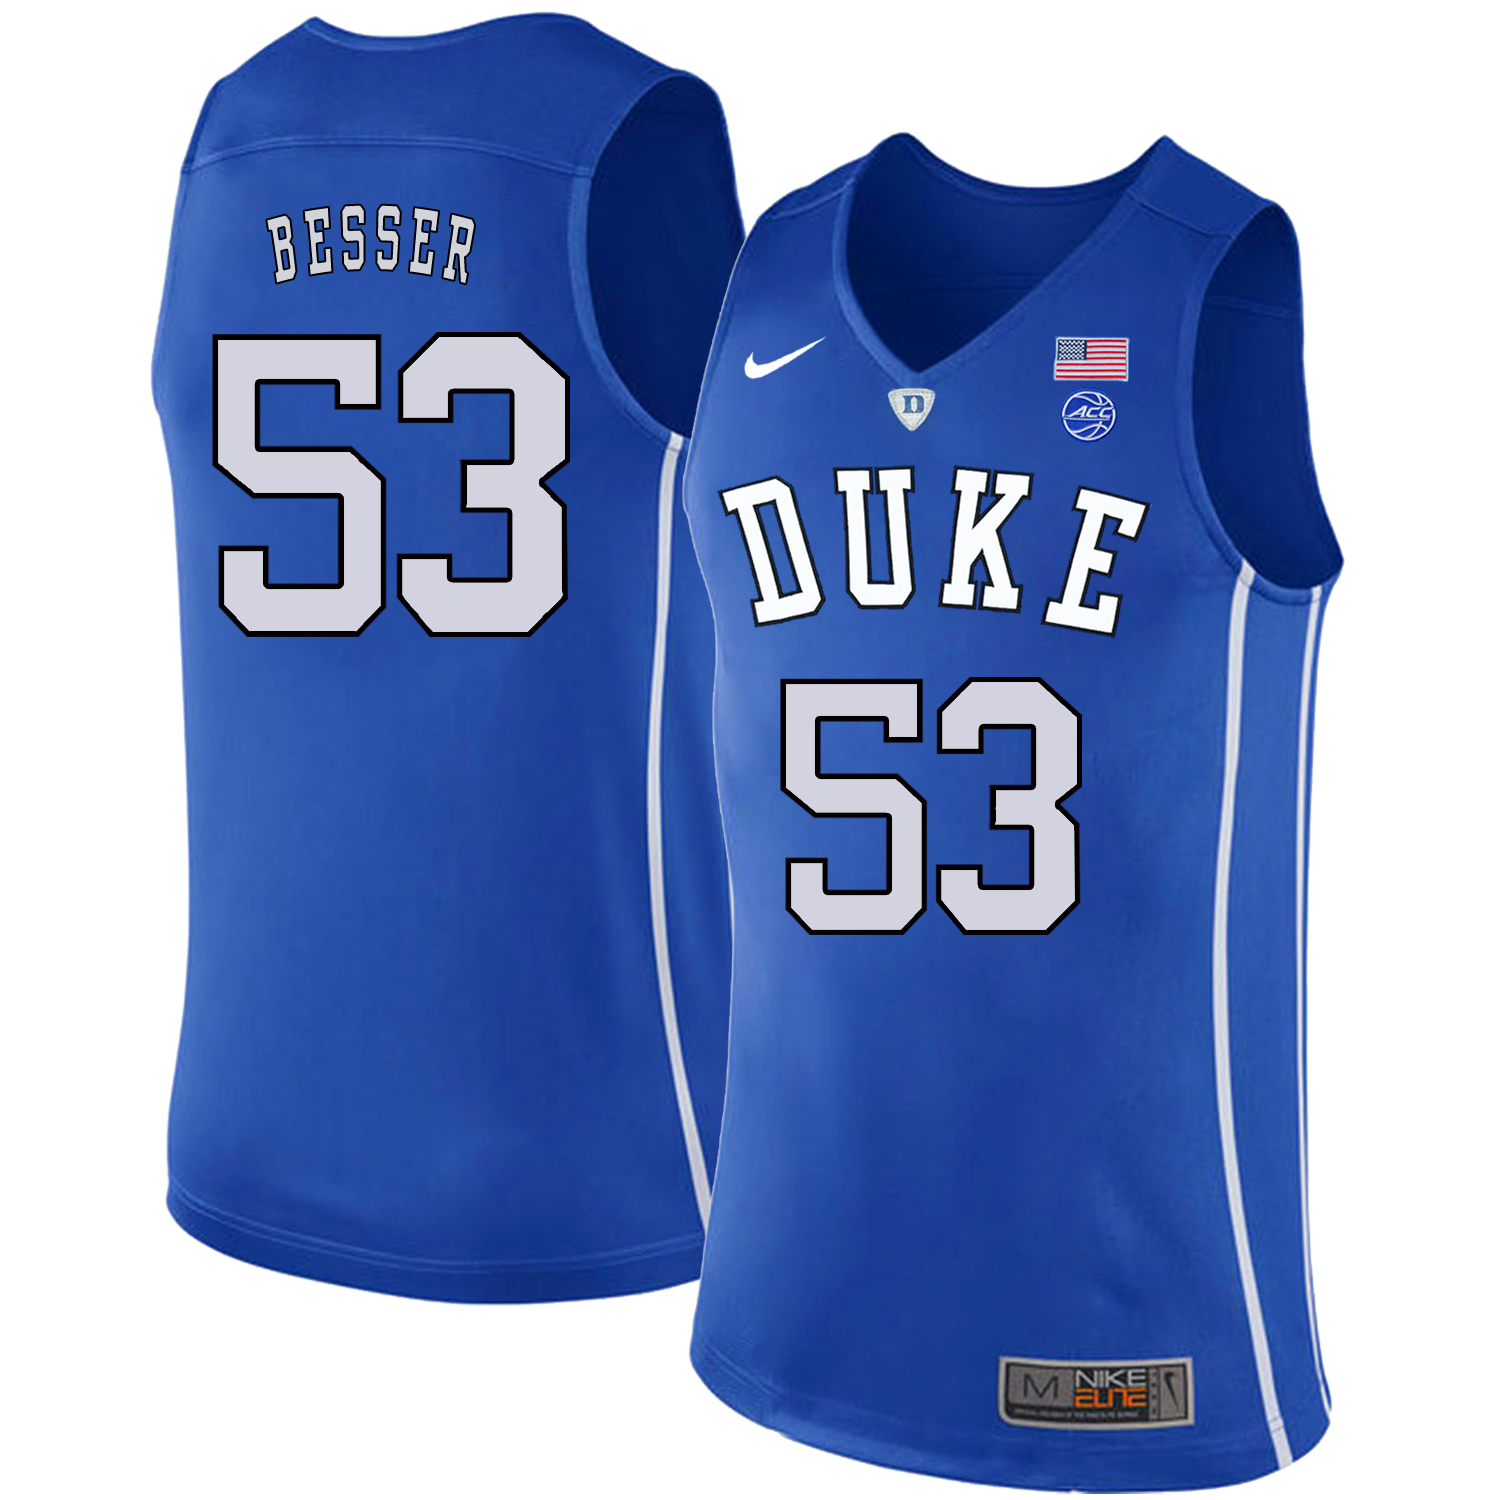 Duke Blue Devils 53 Brennan Besser Blue Nike College Basketball Jersey